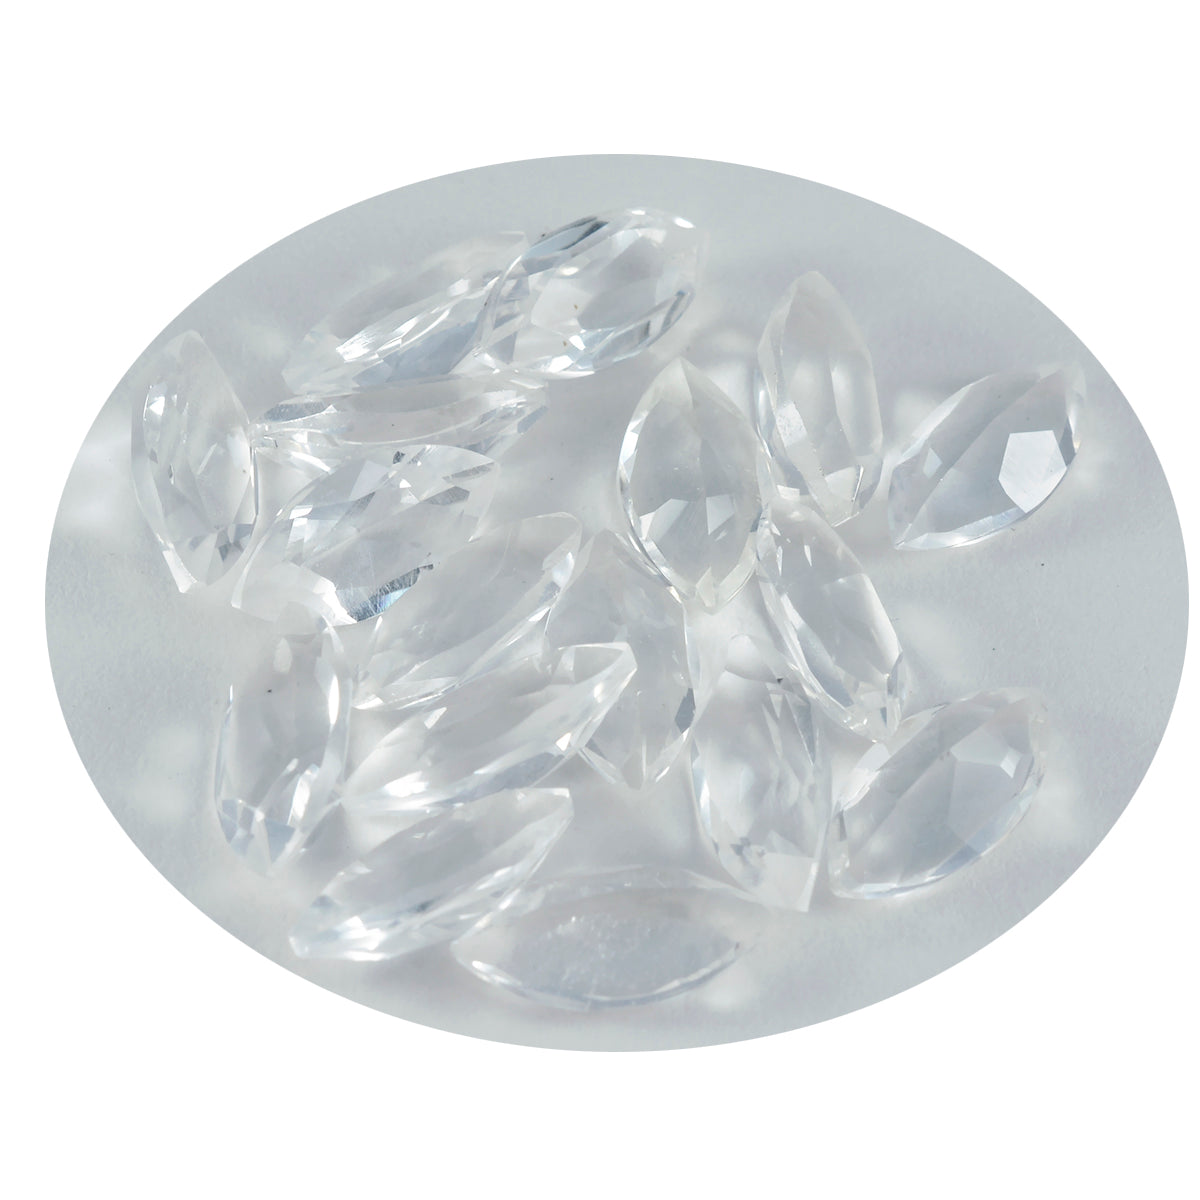 Riyogems 1PC White Crystal Quartz Faceted 6x12 mm Marquise Shape A+ Quality Gems